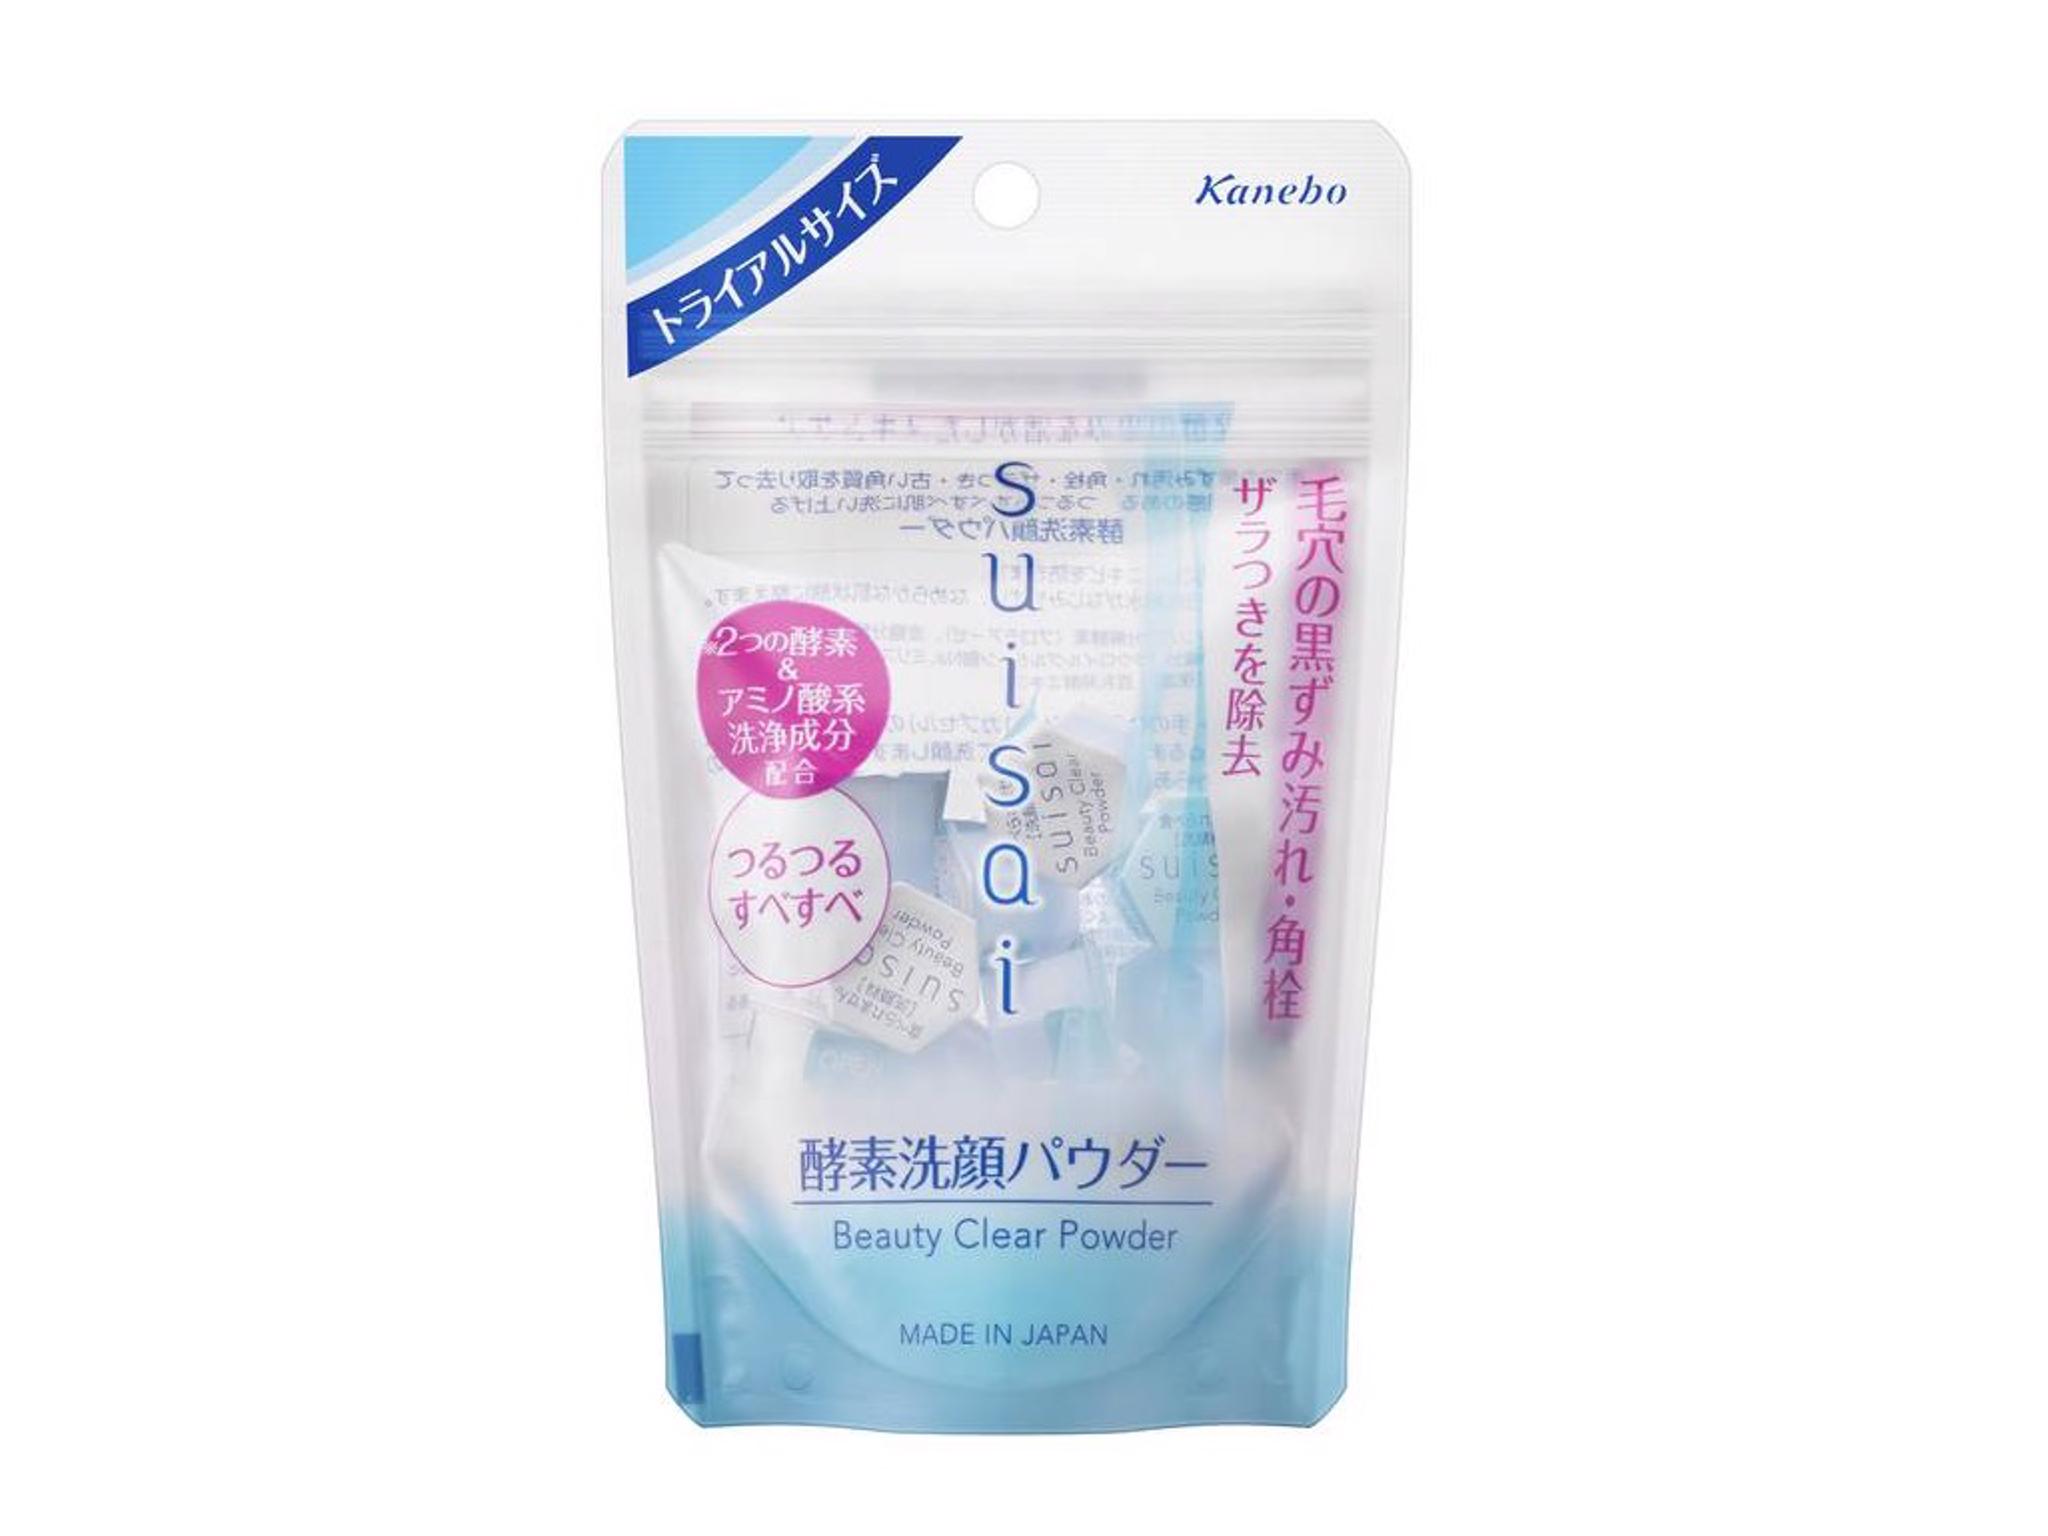 Kanebo - Suisai - Beauty Clear Powder 15pcs  2433